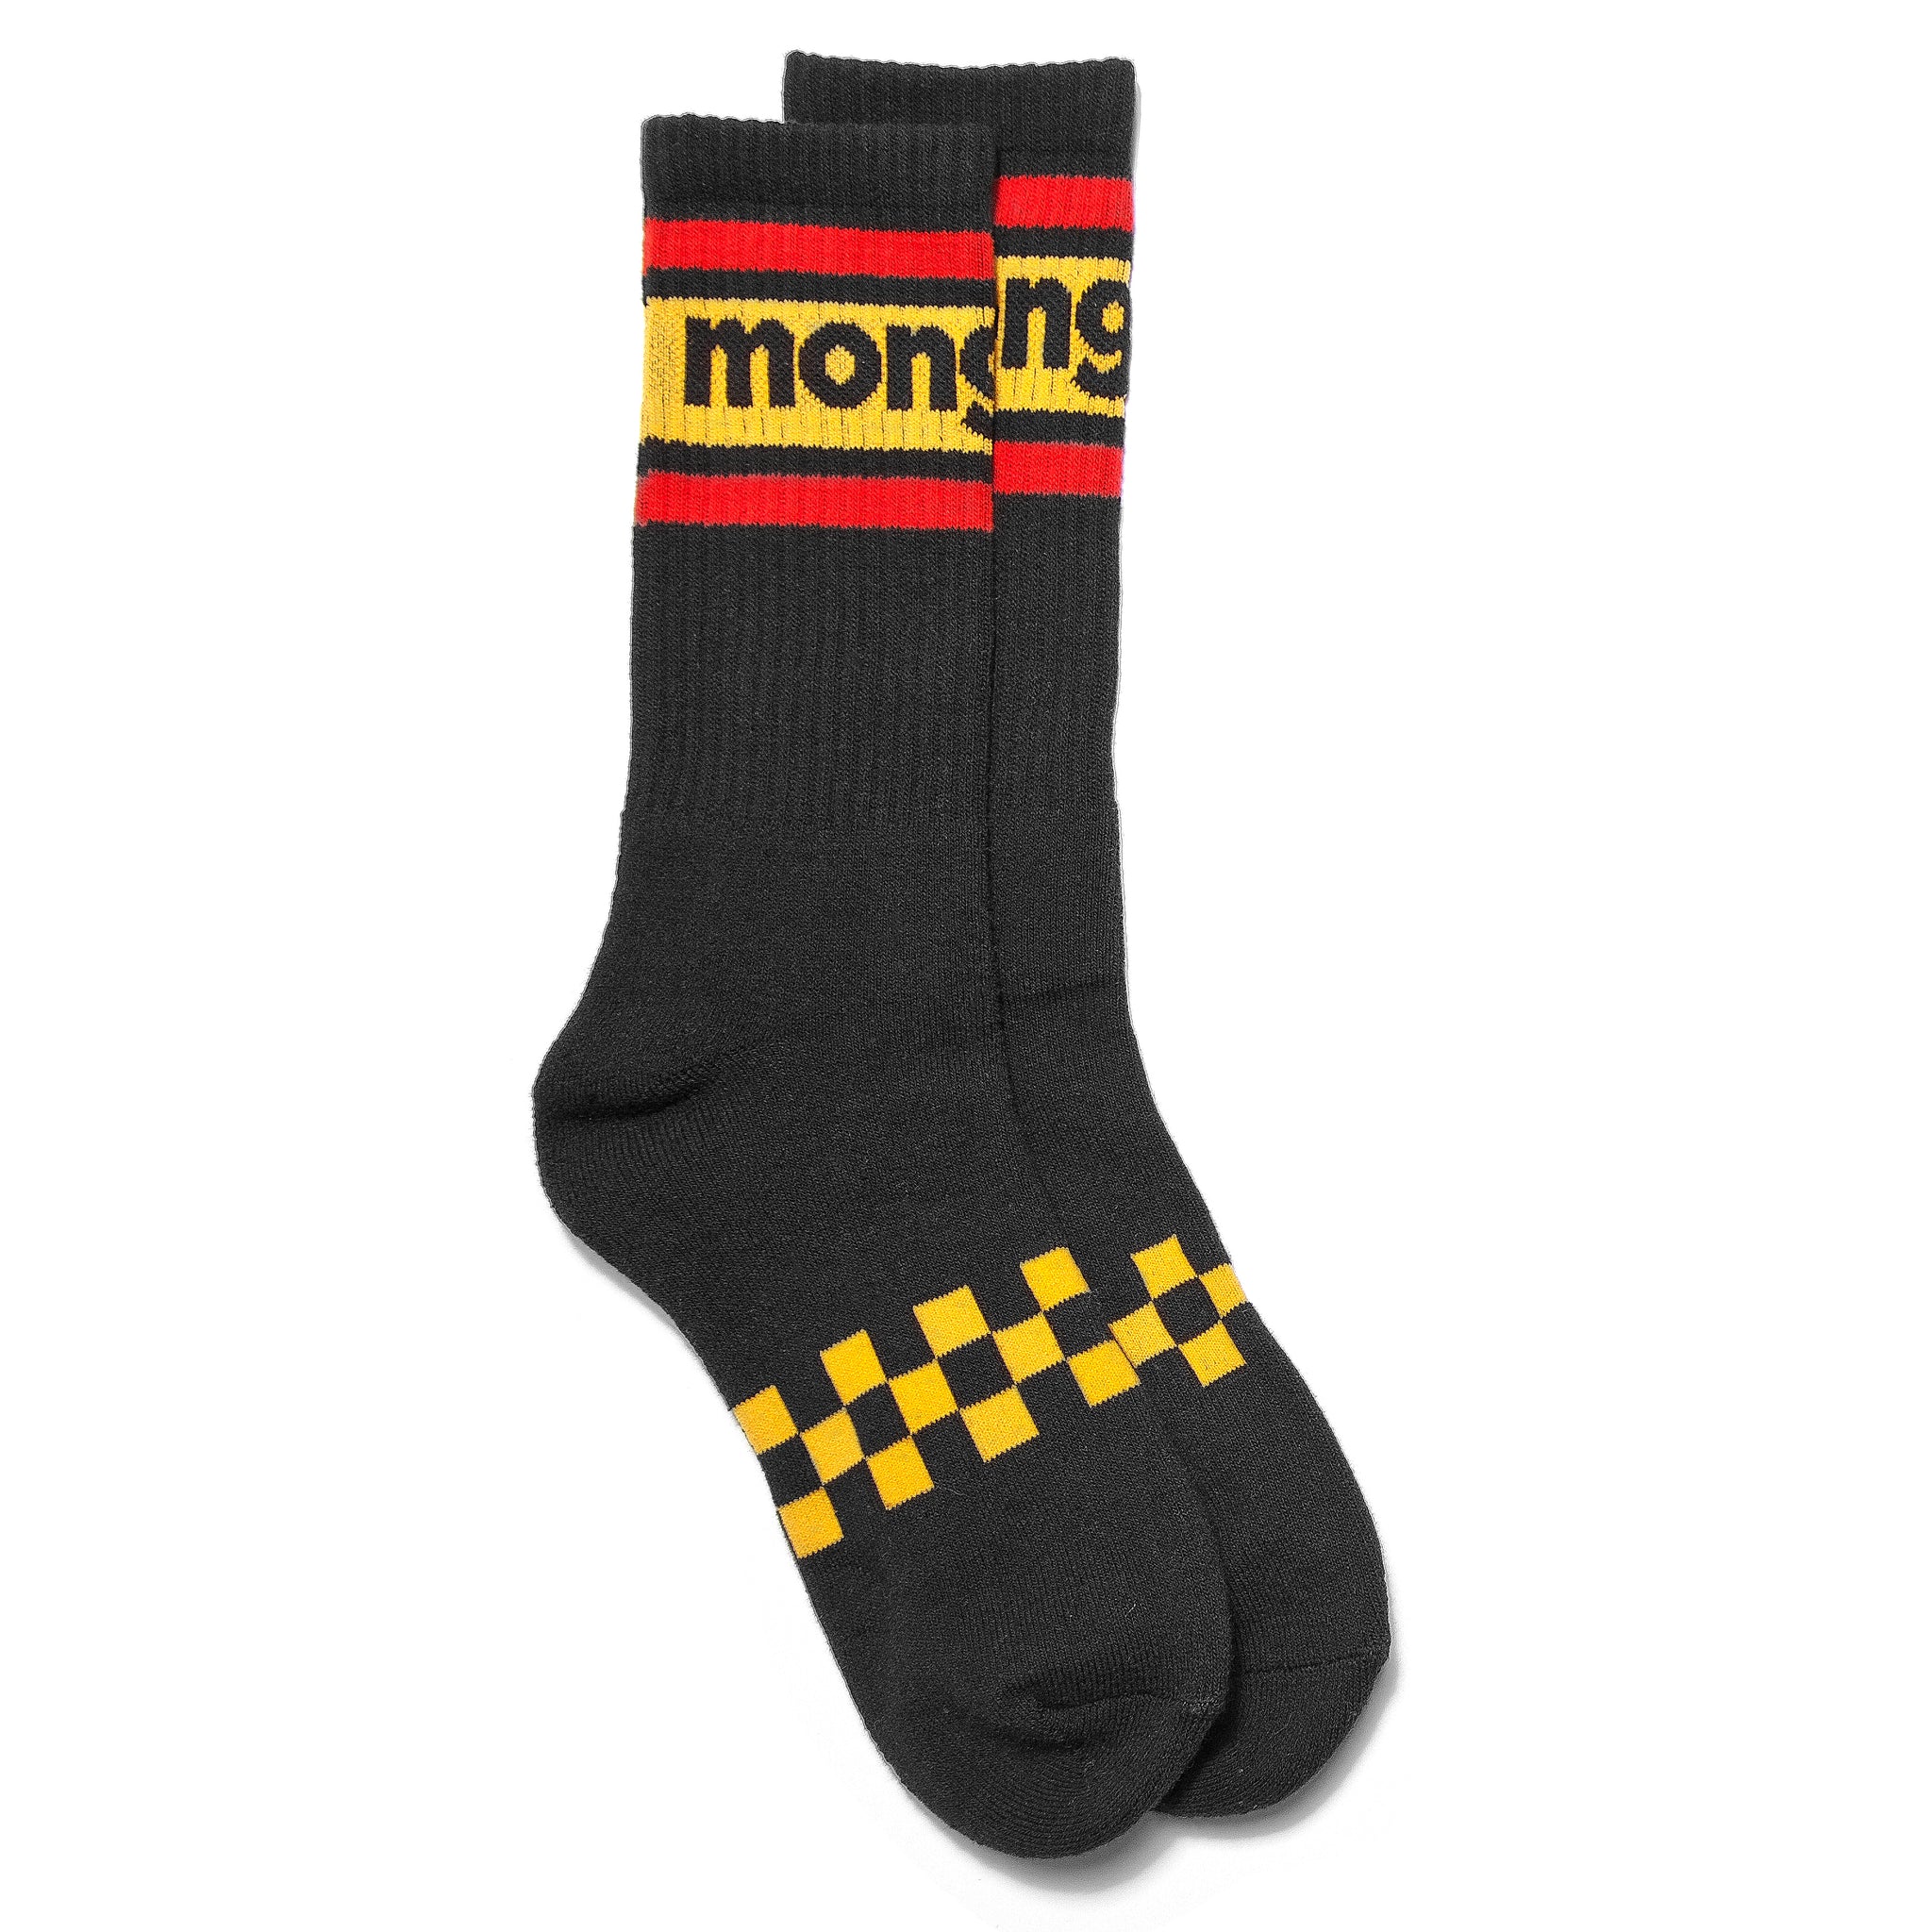 Mongoose Checkerboard Sock - Black